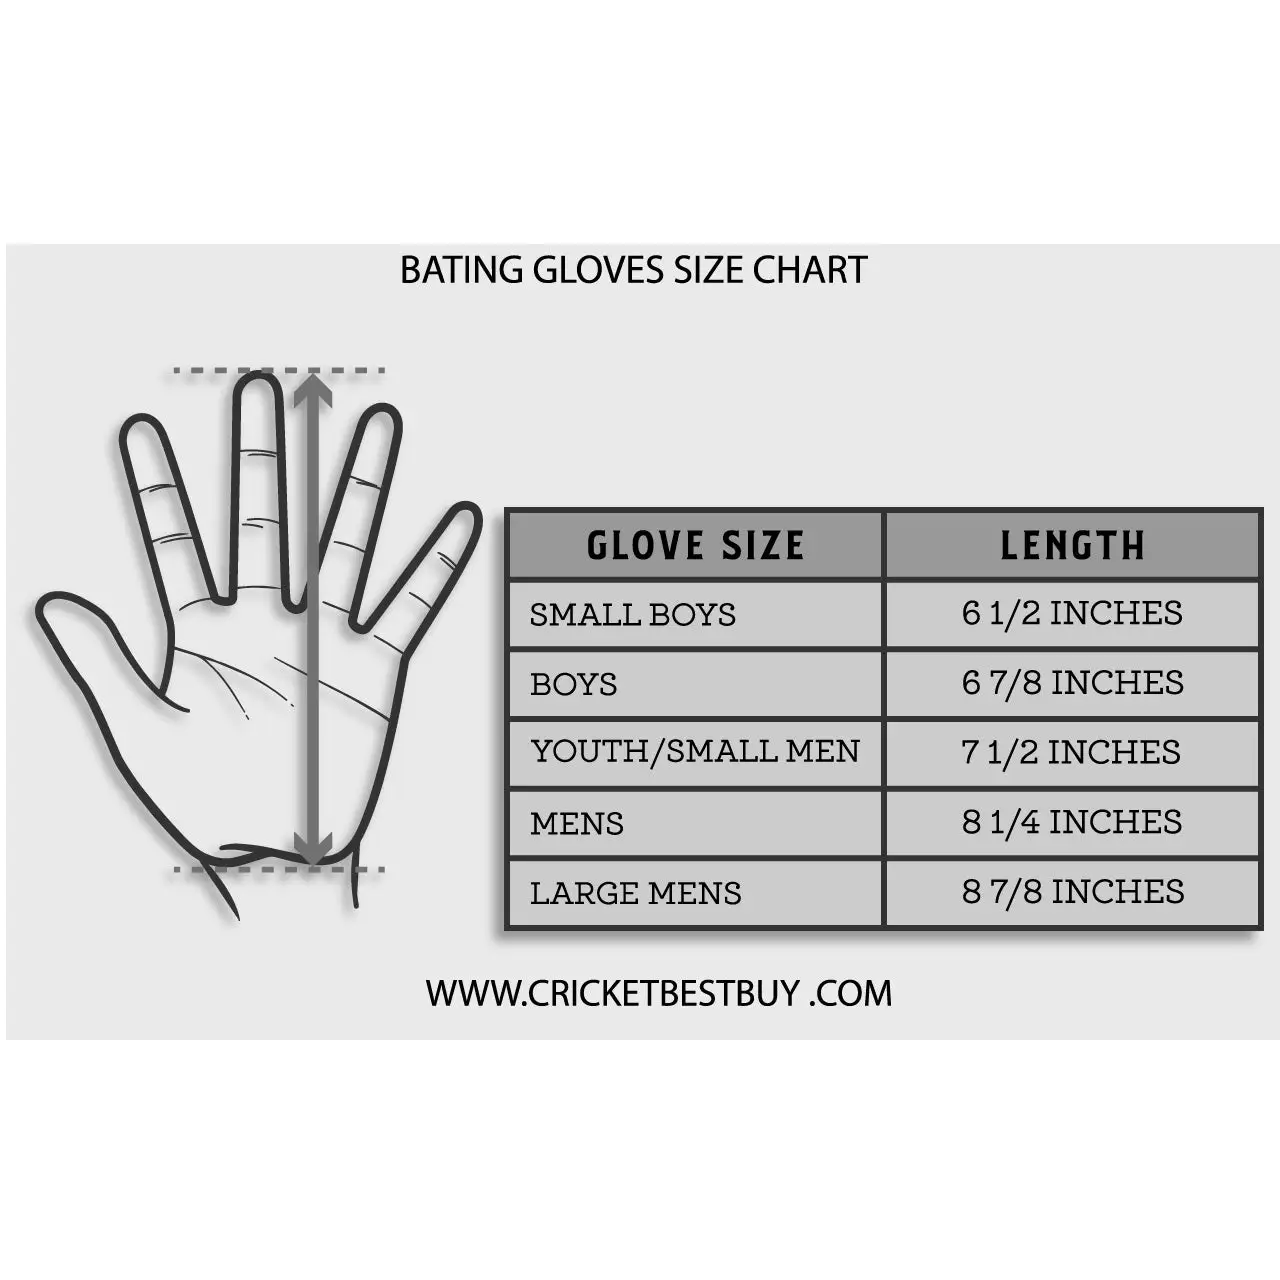 SG Test Pro Cricket Batting Gloves - GLOVE - BATTING